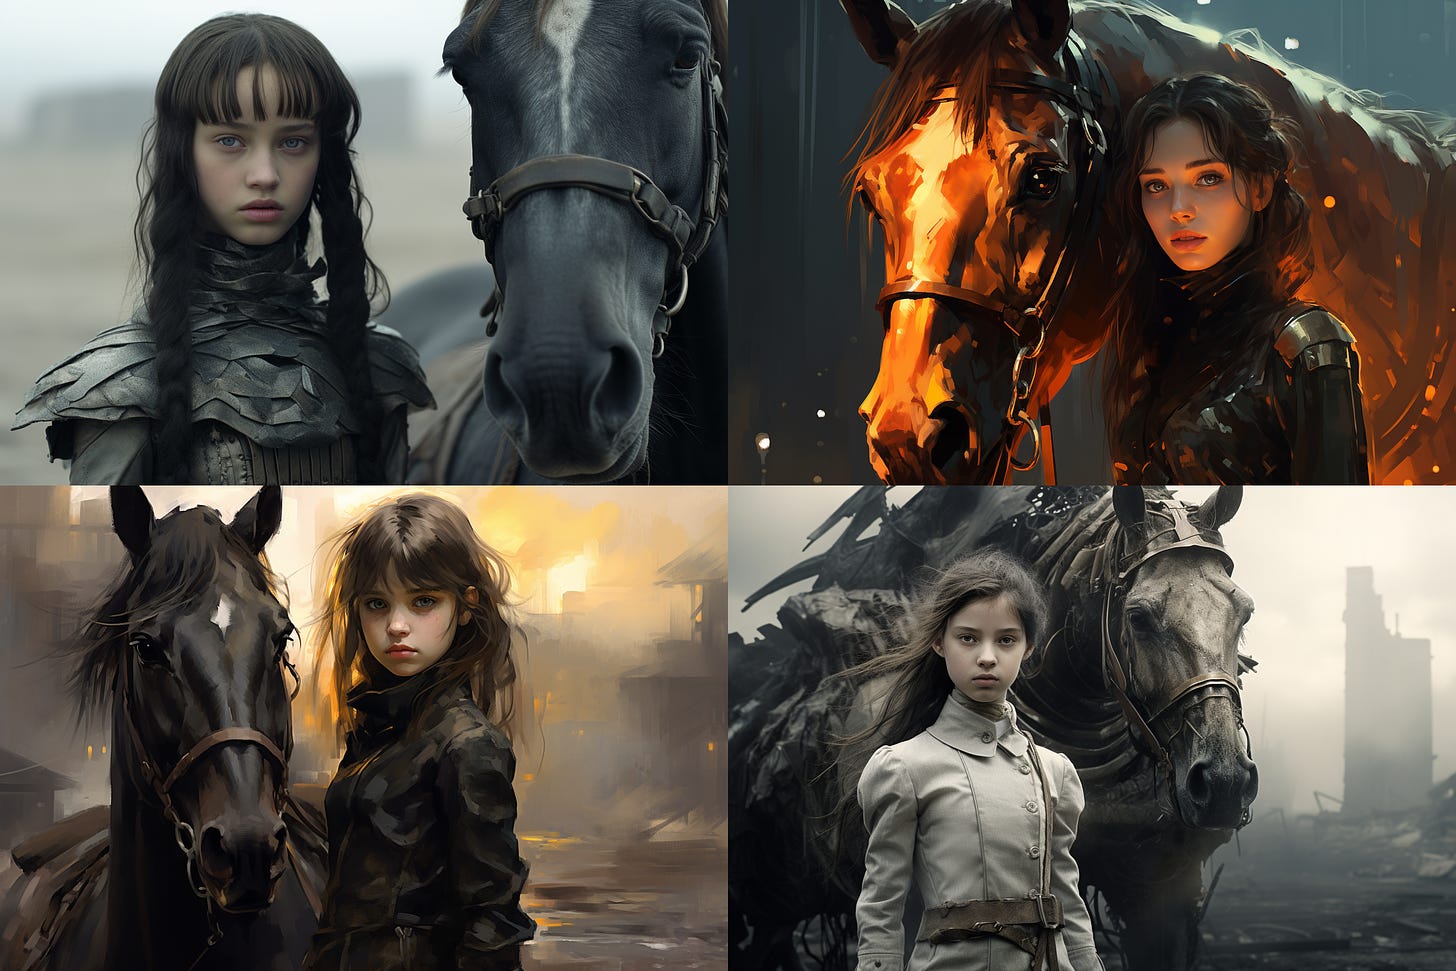 4-image Midjourney grid for "girl, horse, dystopian"